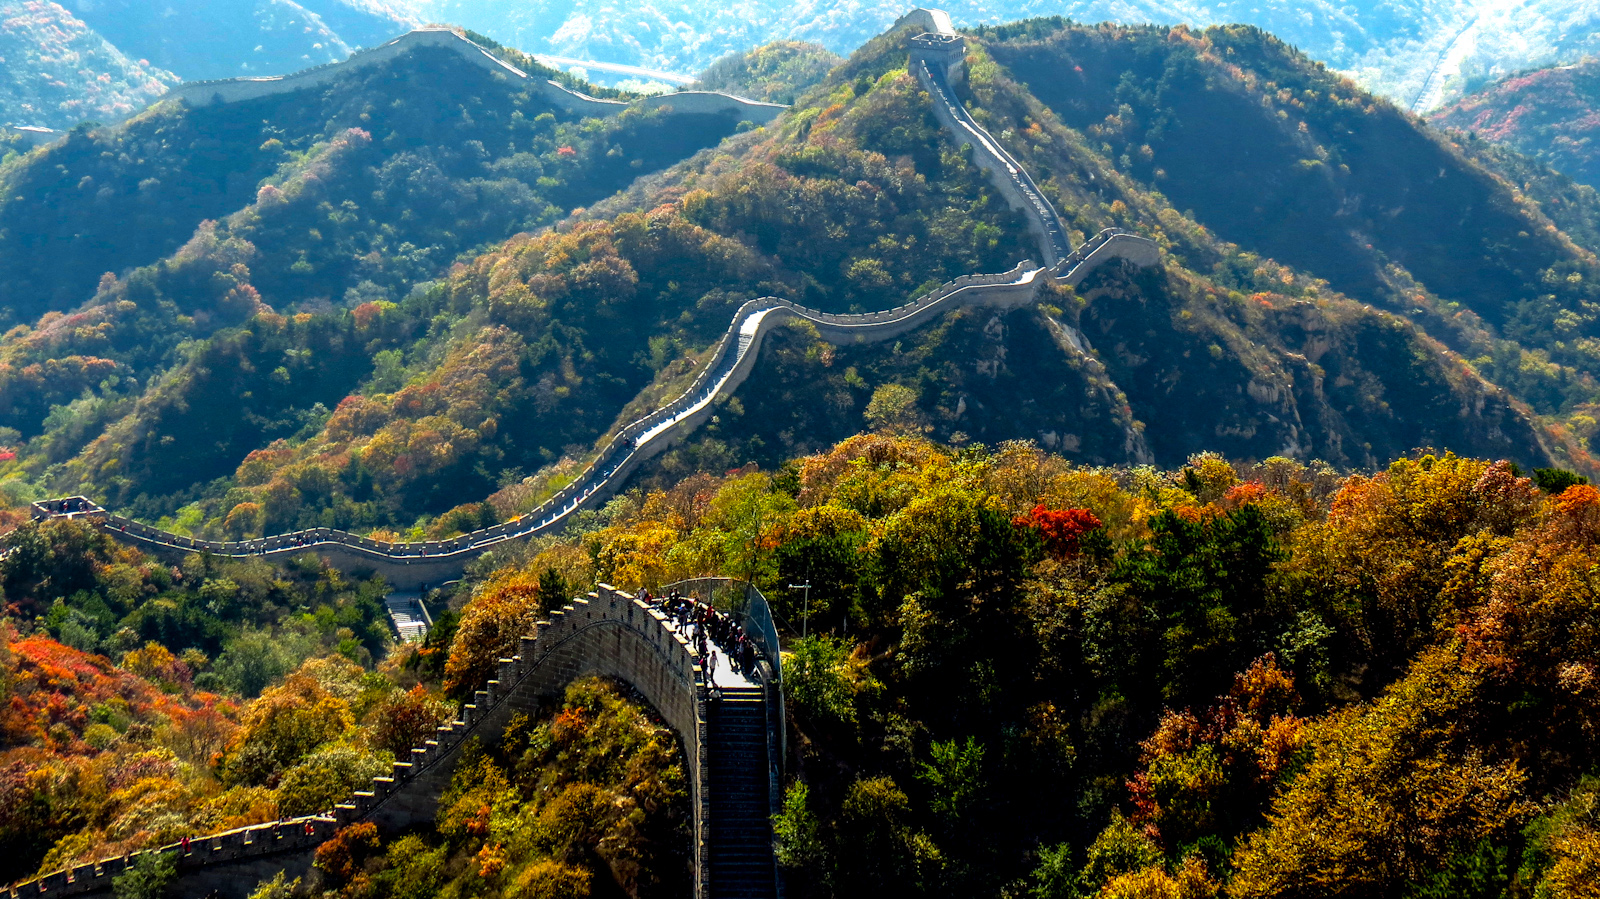 New Great Wall Of China Pics Wallpaper Risewlp